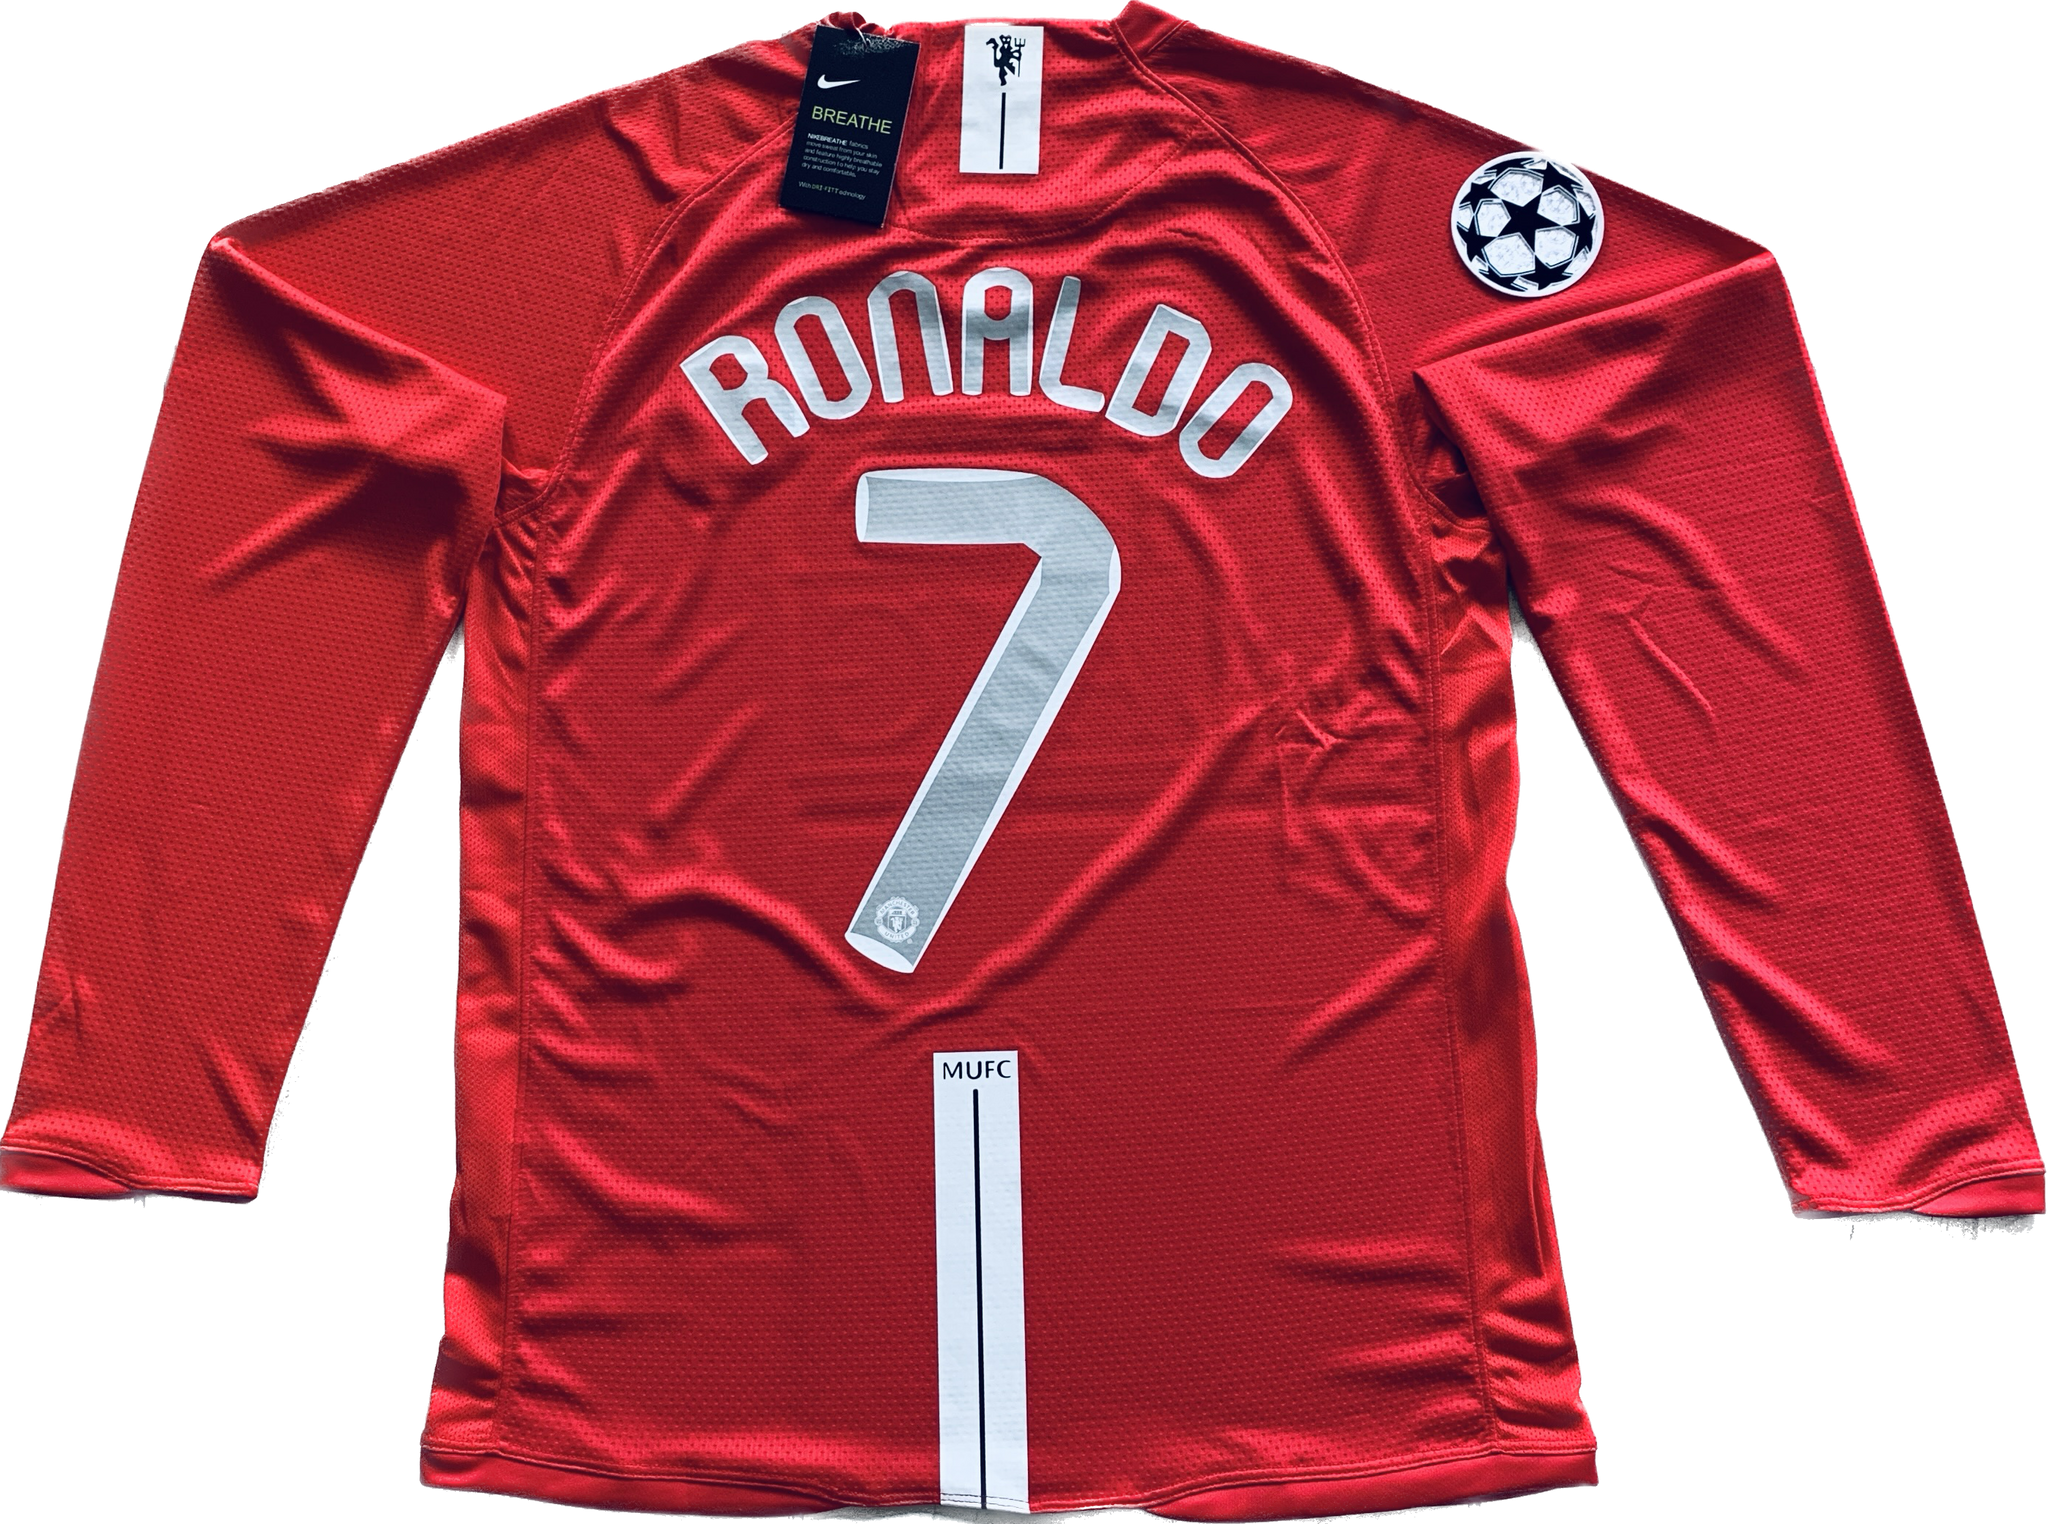 ronaldo jersey united